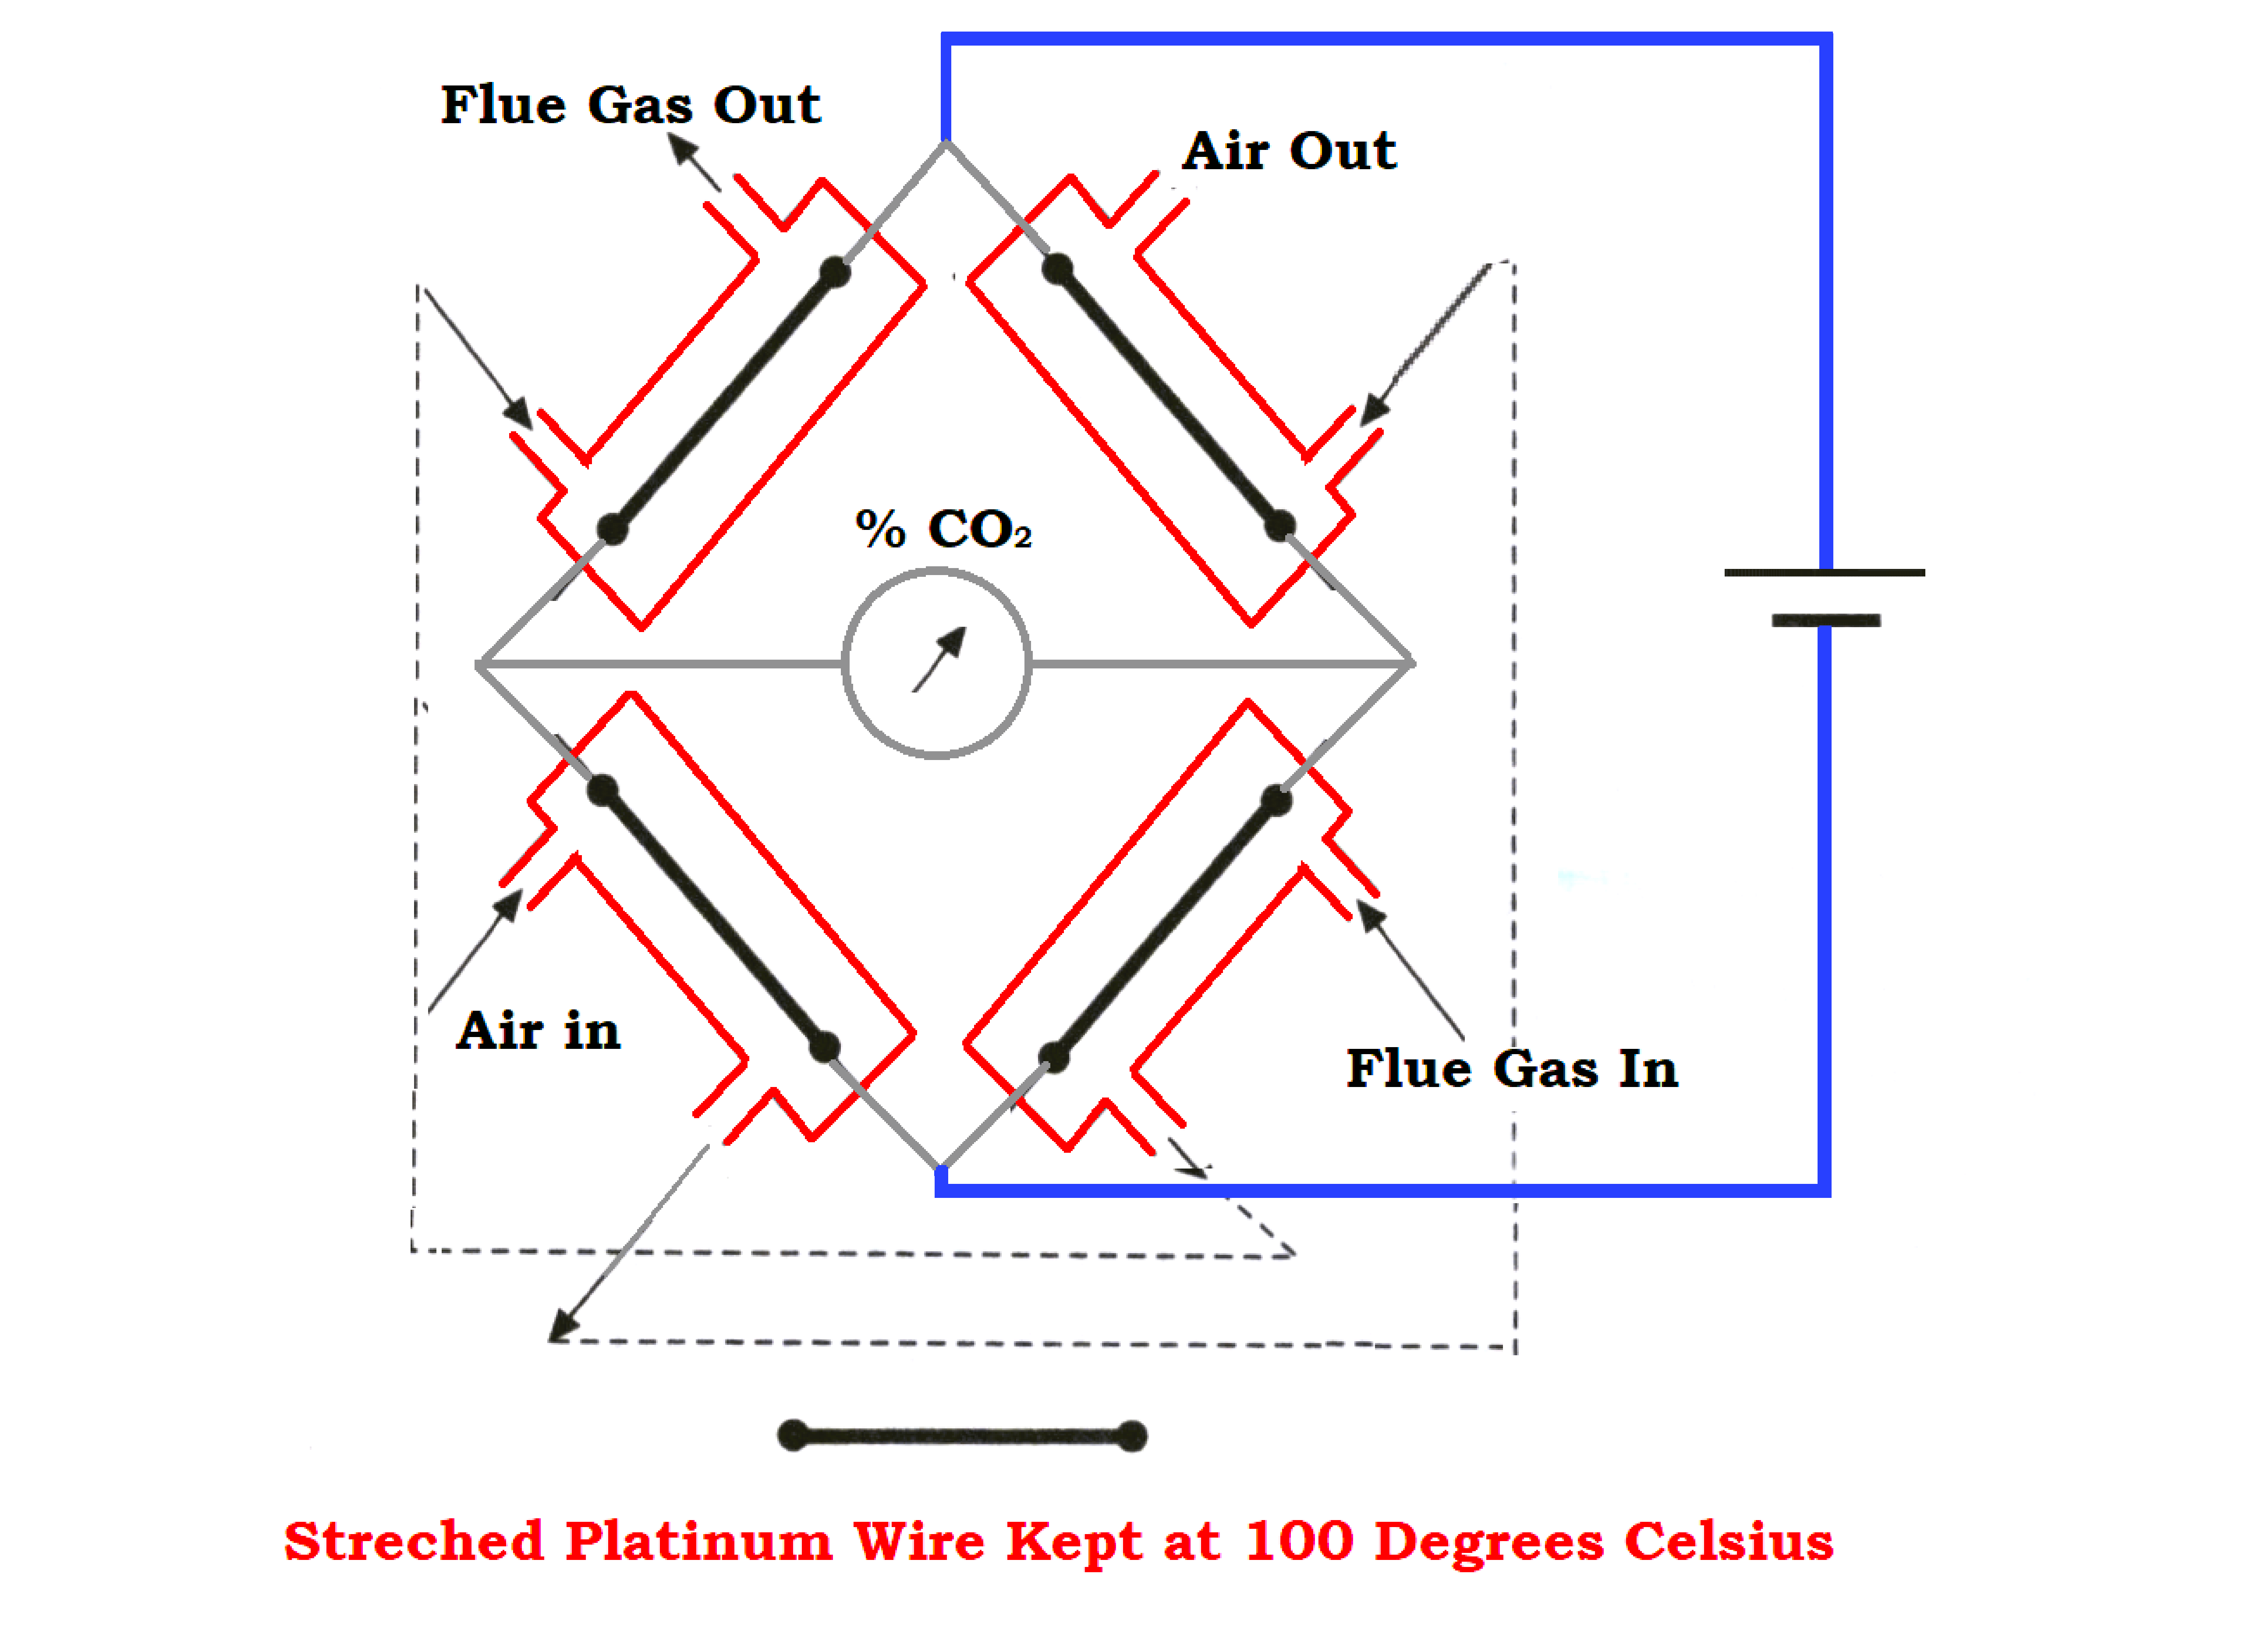 Measurement of Carbon Dioxide in Flue Gas